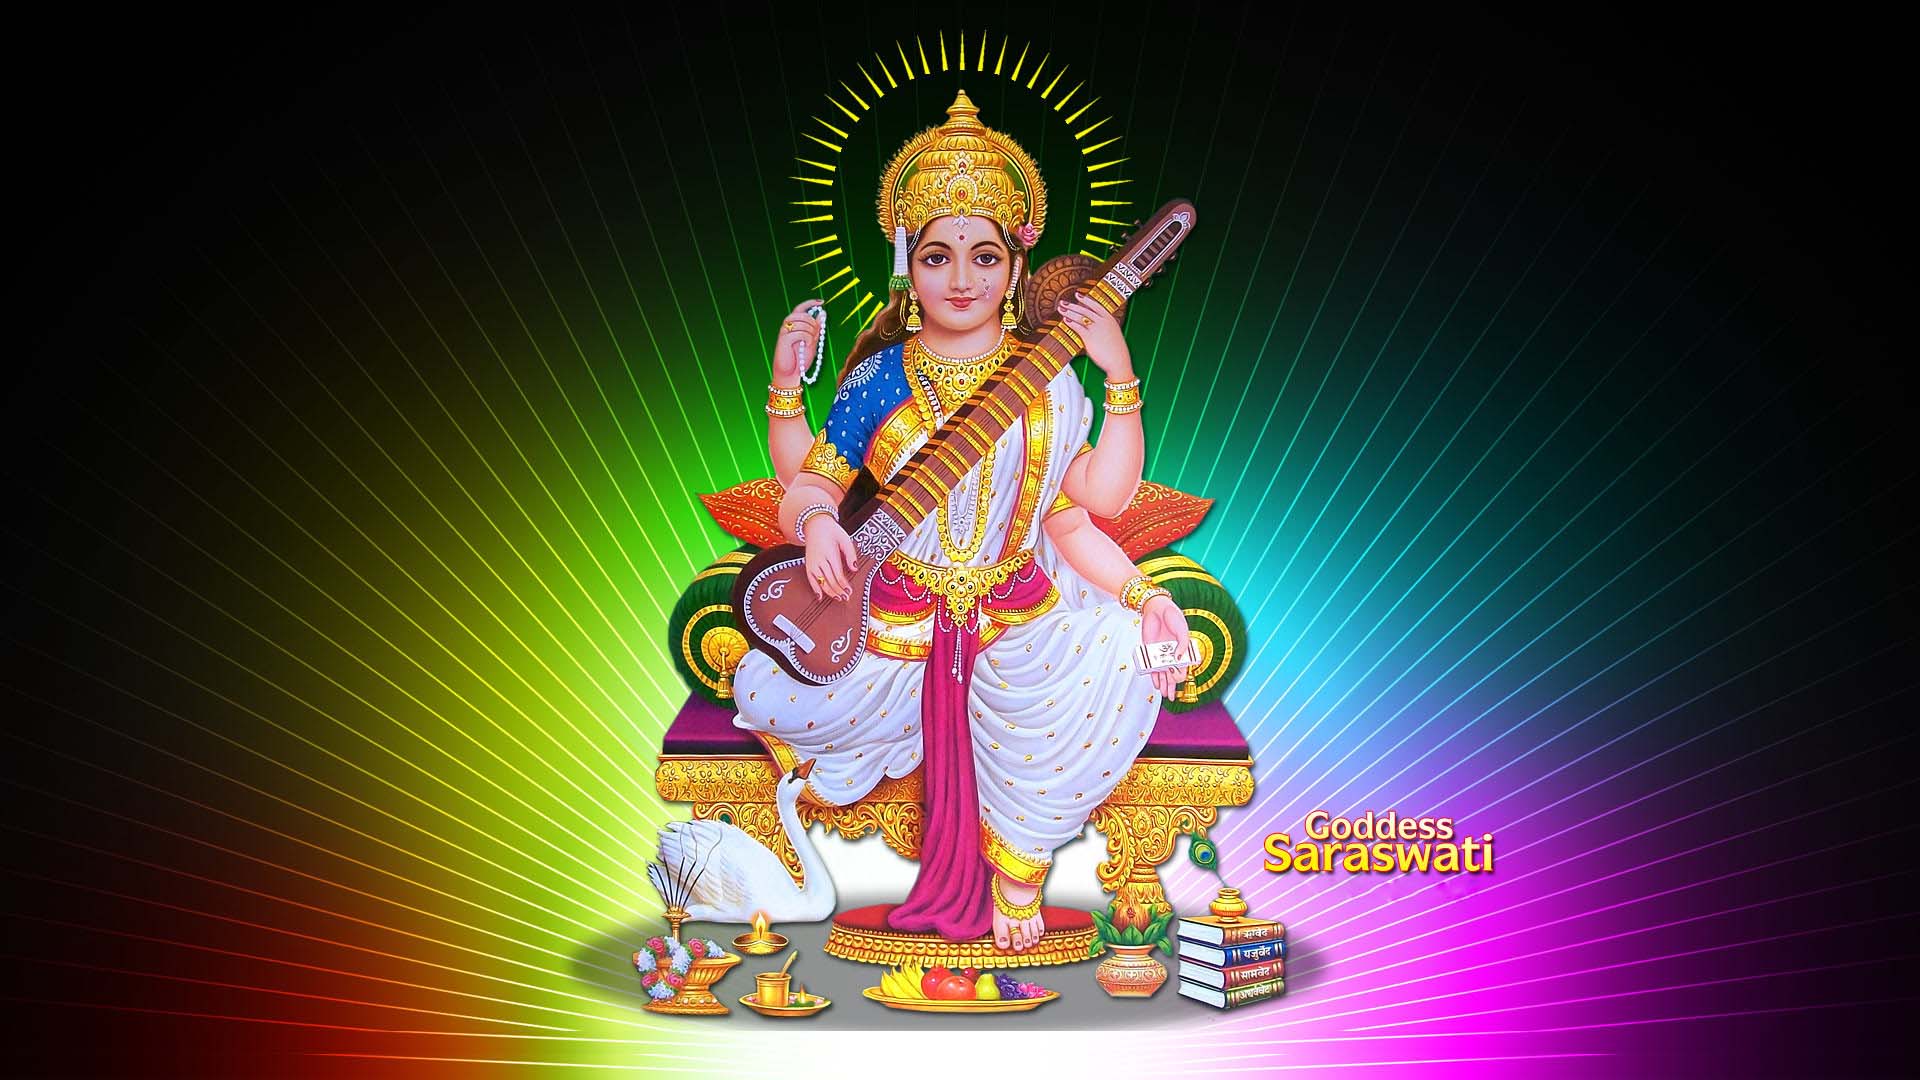 Beautiful Images Of Maa Saraswati Hindu Gods and Goddesses.